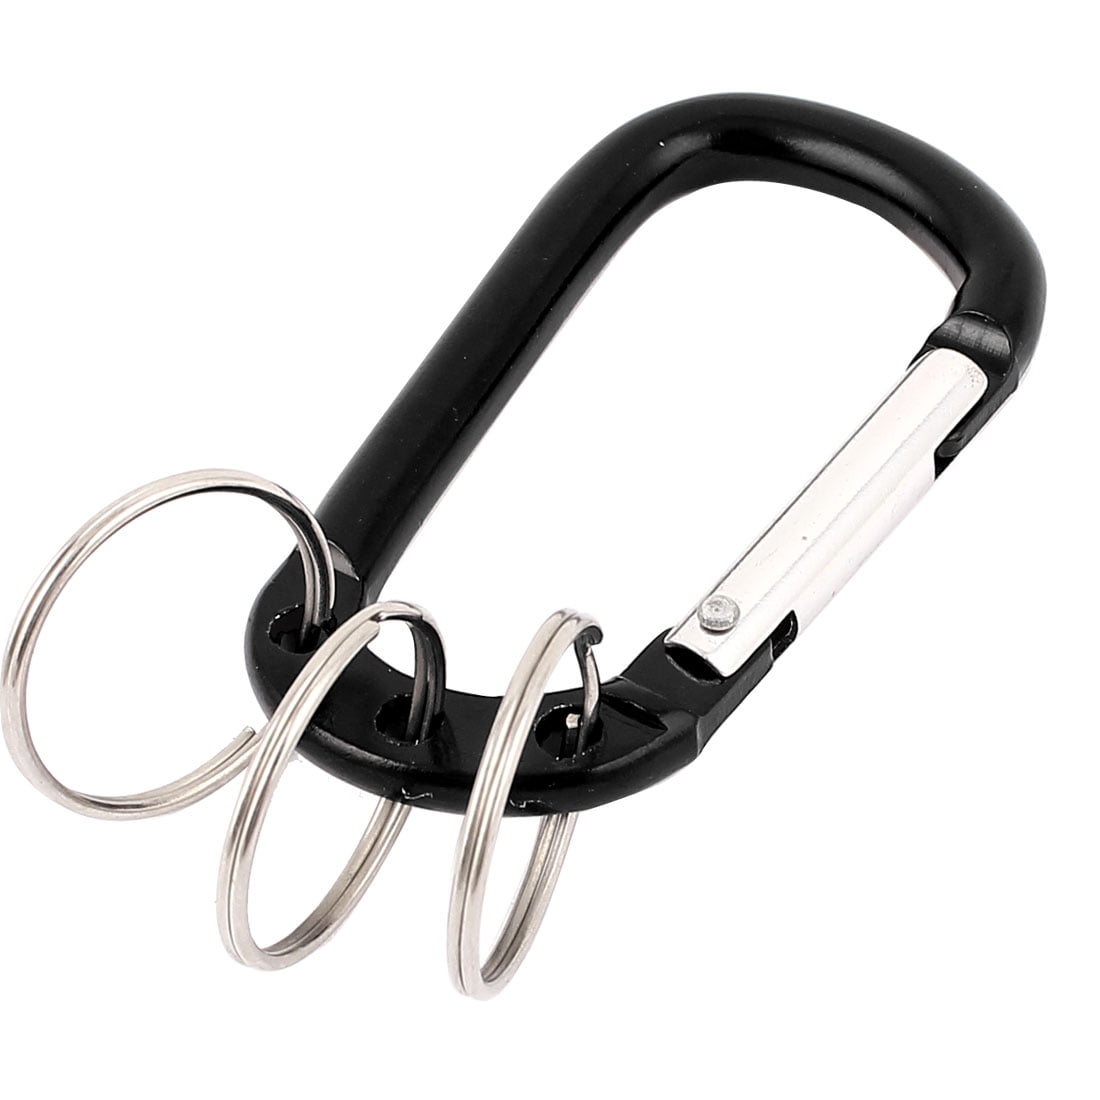 6 x Aluminum Carabiner D-Ring Key Chain Clip Snap Hook Karabiner Camping Key 